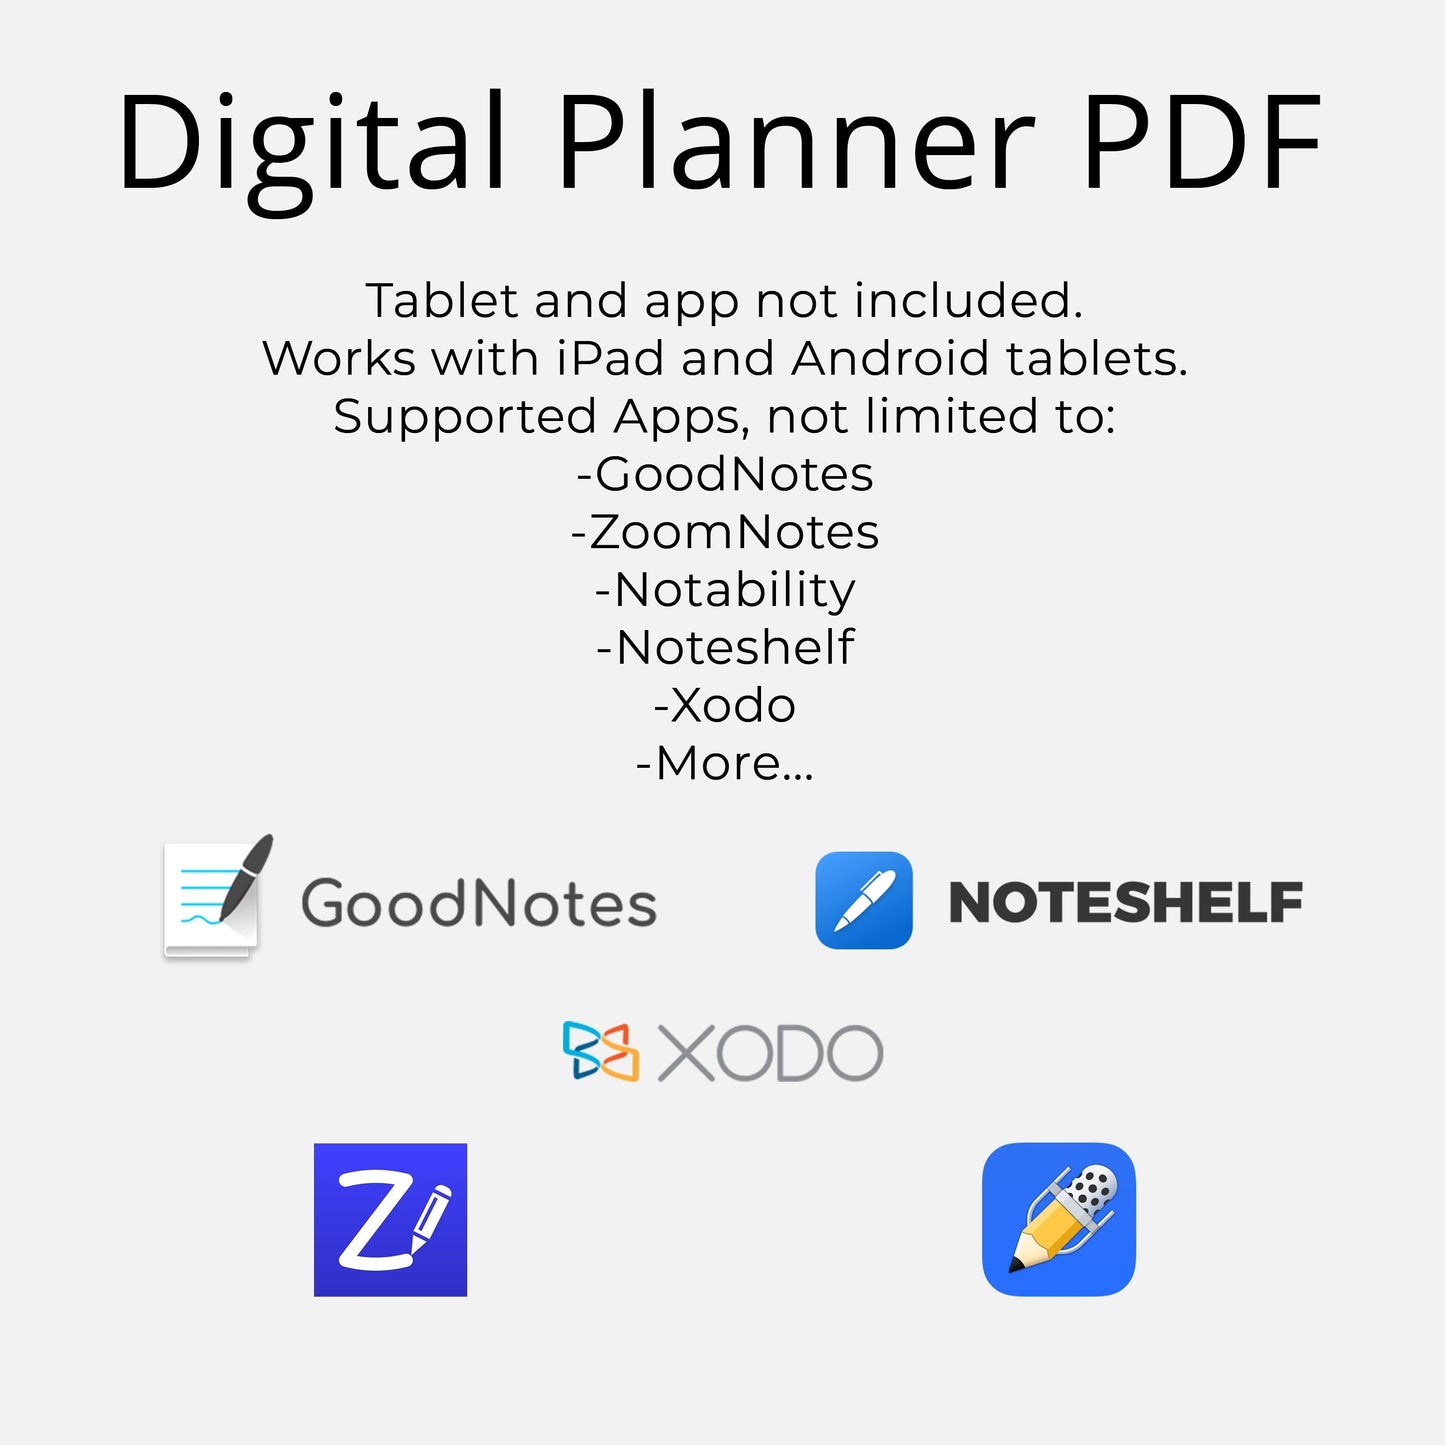 Digital planner pdf for goodnotes, noteshelf, xodo, noteshelf, and notability